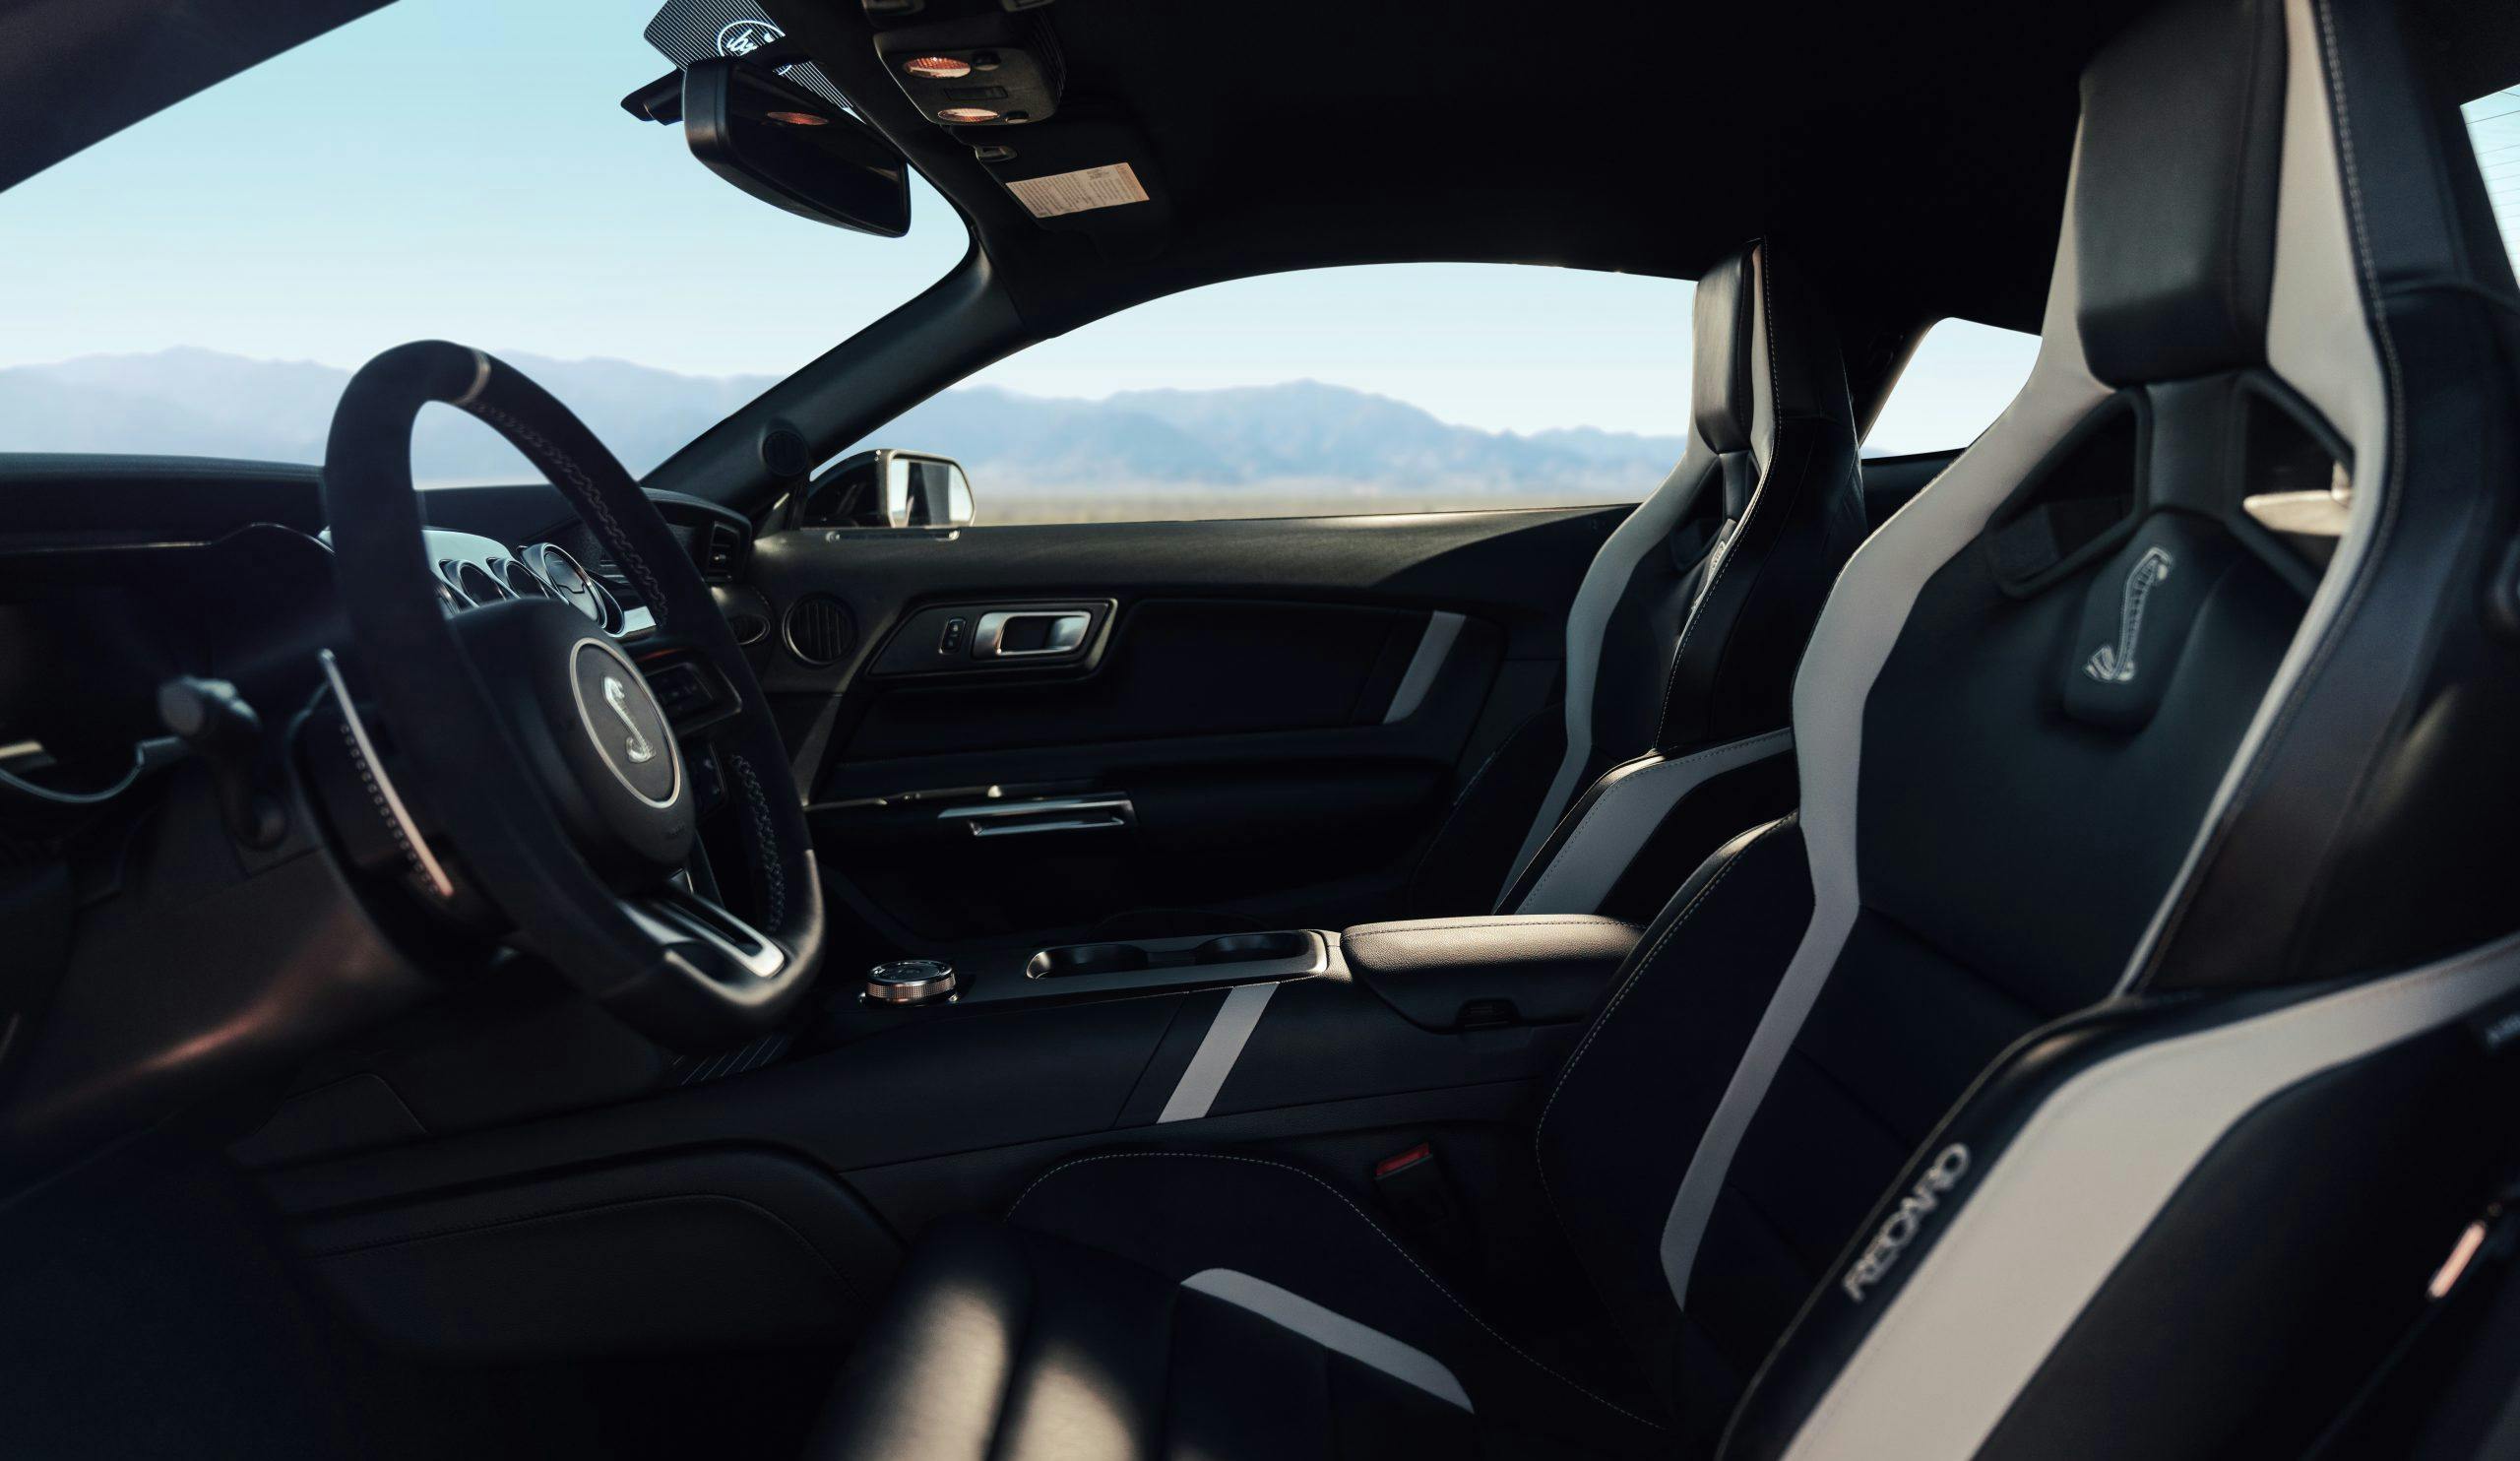 2020 Mustang Shelby GT500 Interior